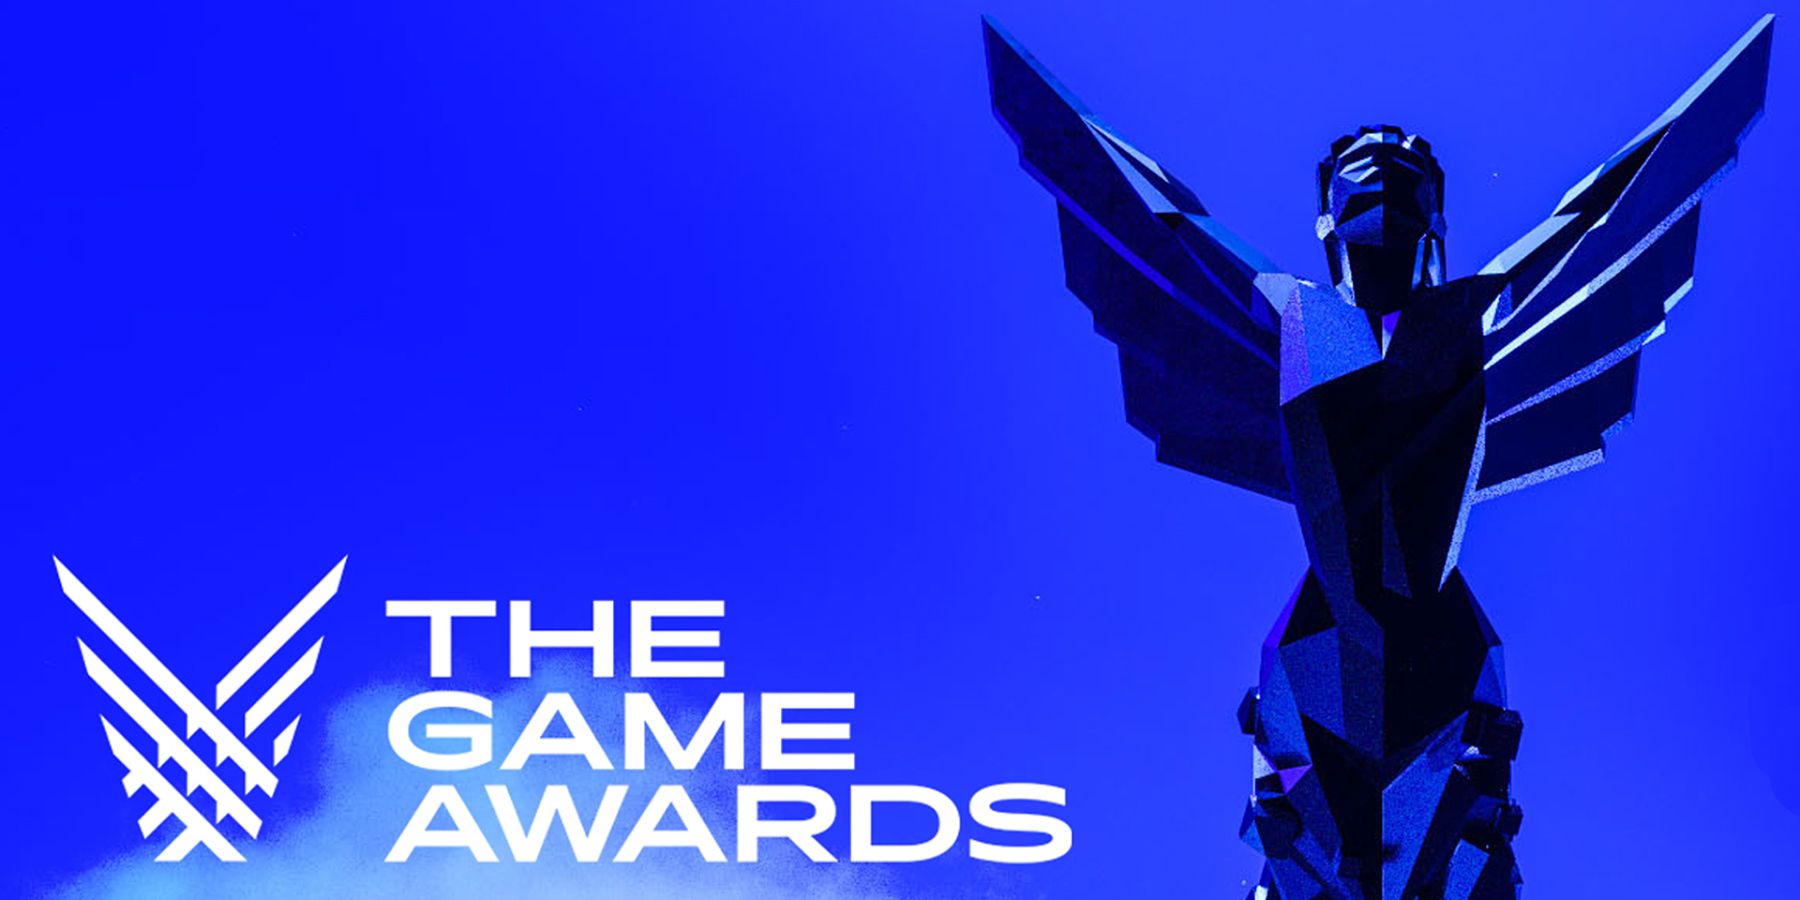 Every award winner at The Game Awards 2021